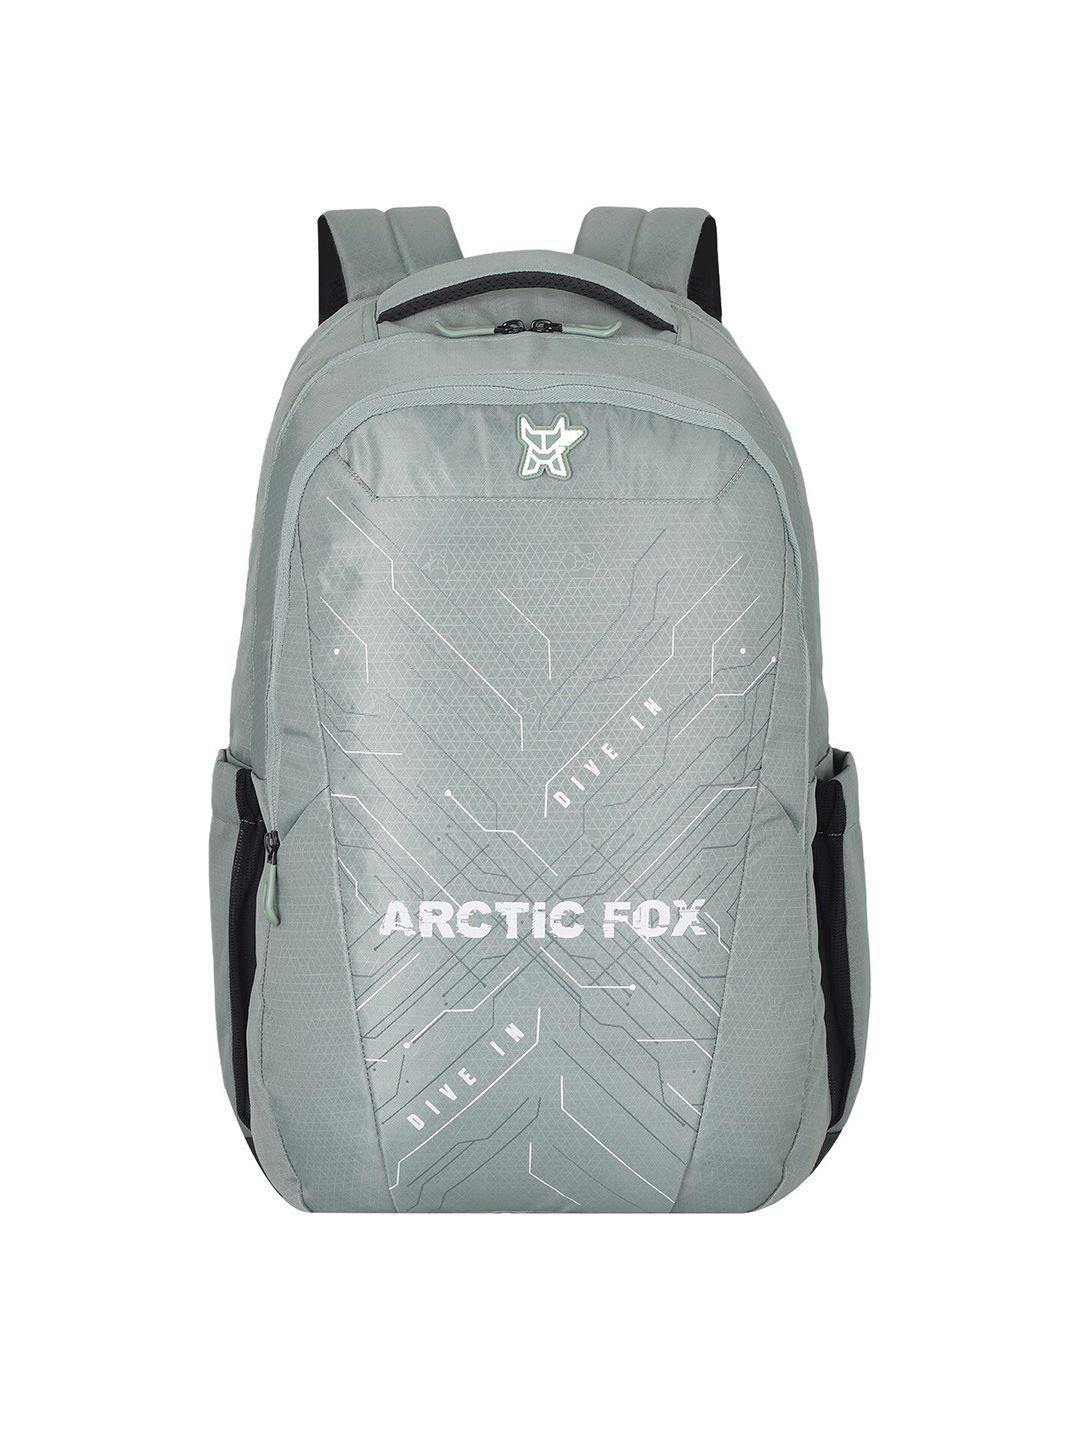 arctic fox unisex green & white printed laptop bag